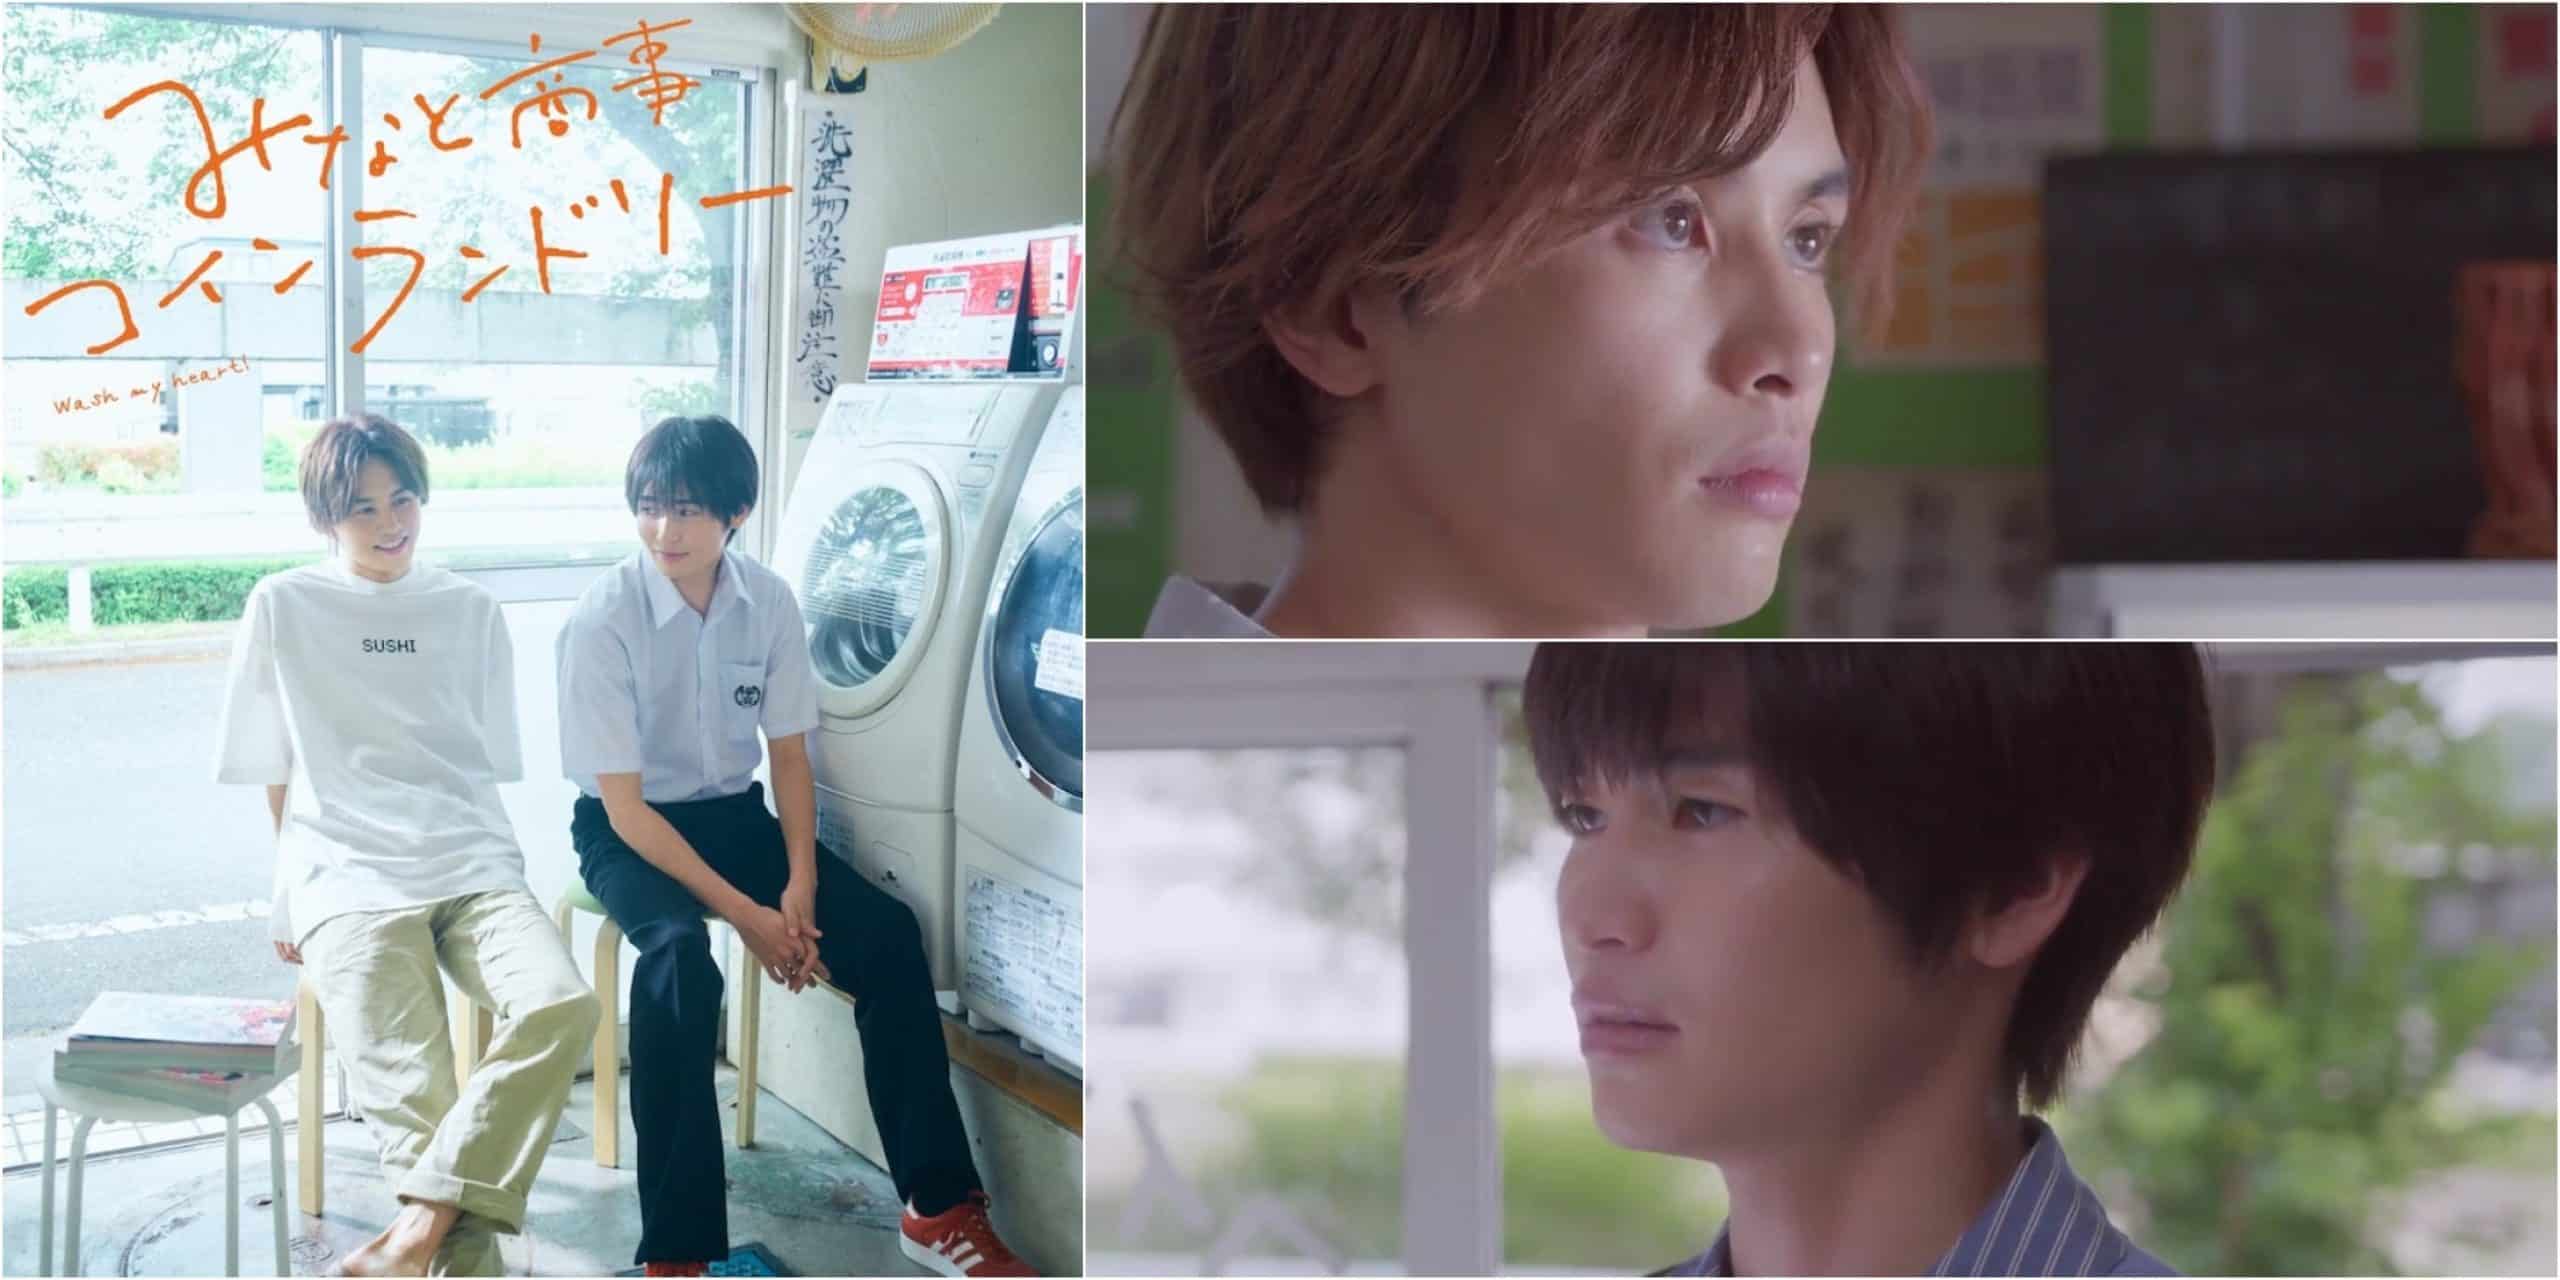 Japanese BL Series Minato's Laundromat Wash My Heart! Season 2 Episode 1 Release Date